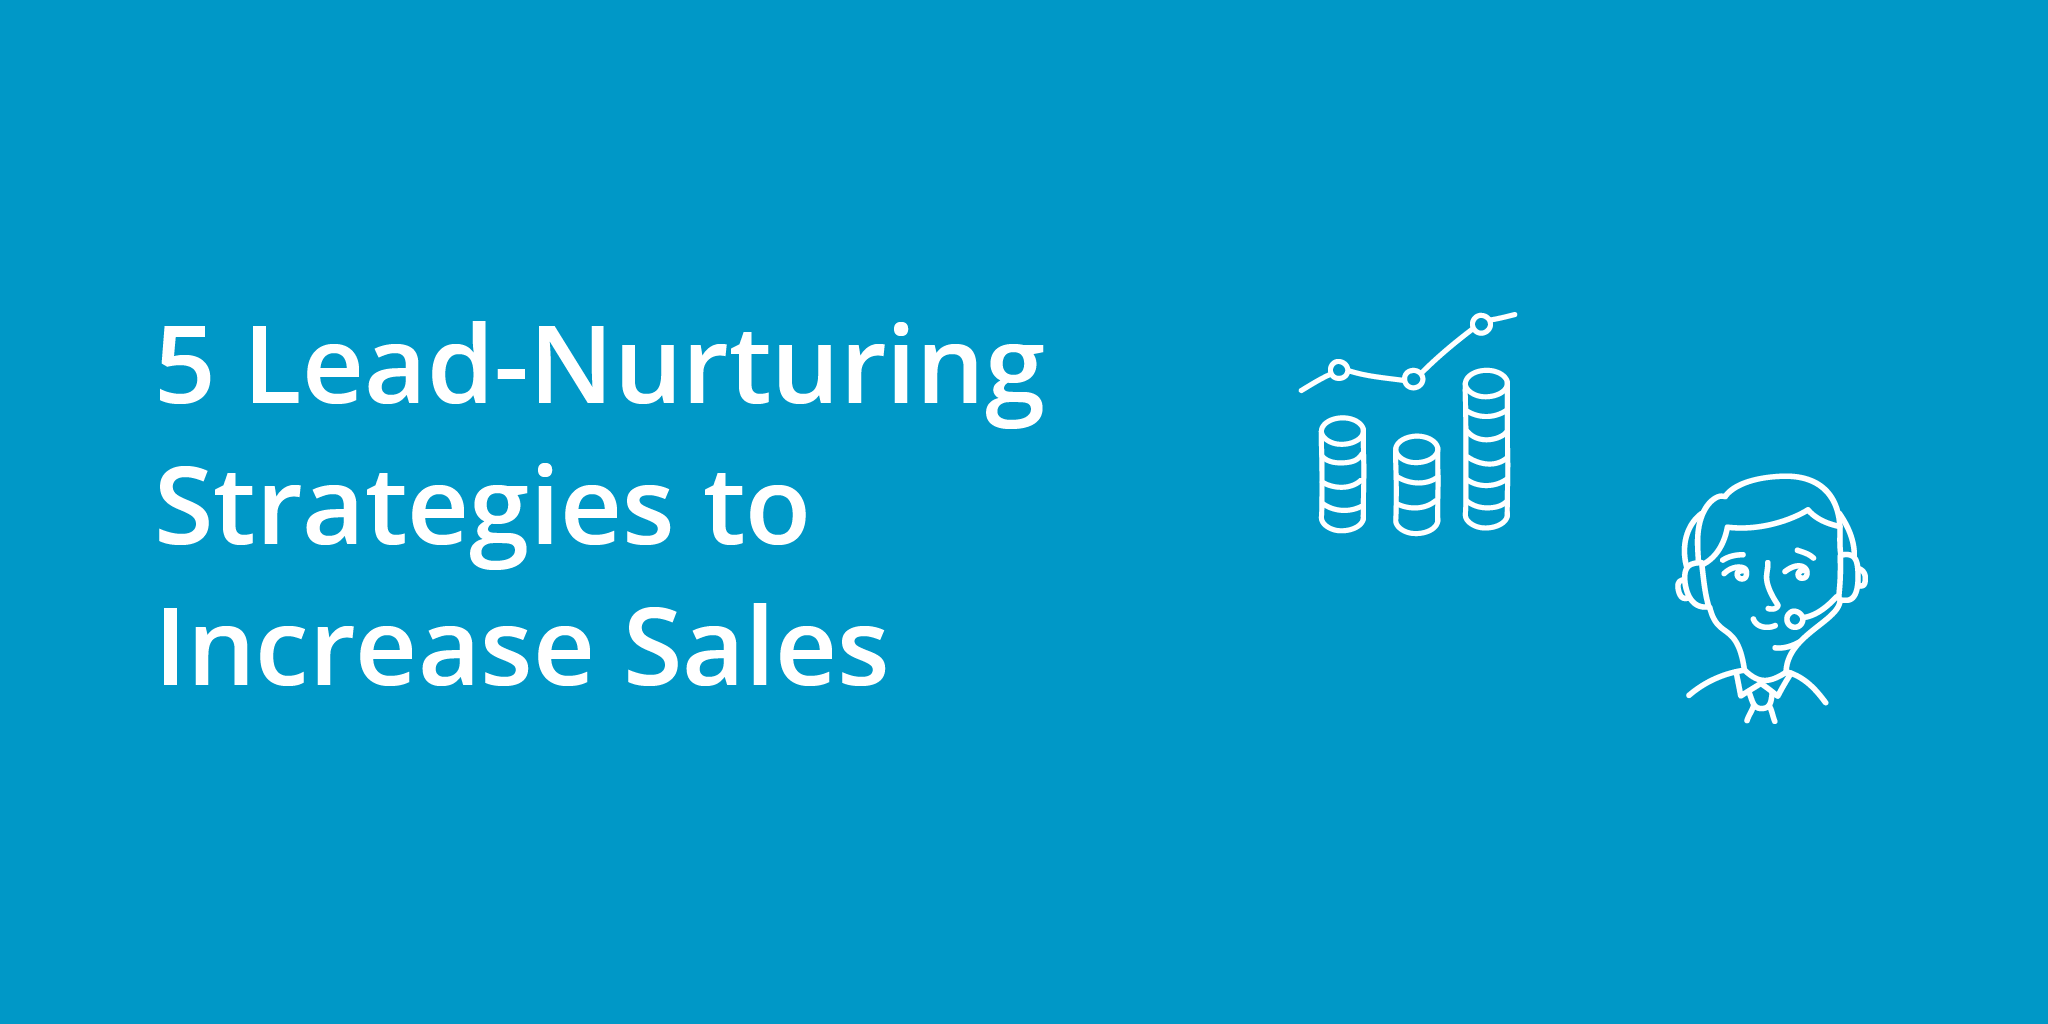 5 Lead-Nurturing Strategies to Increase Sales | Telephones for business